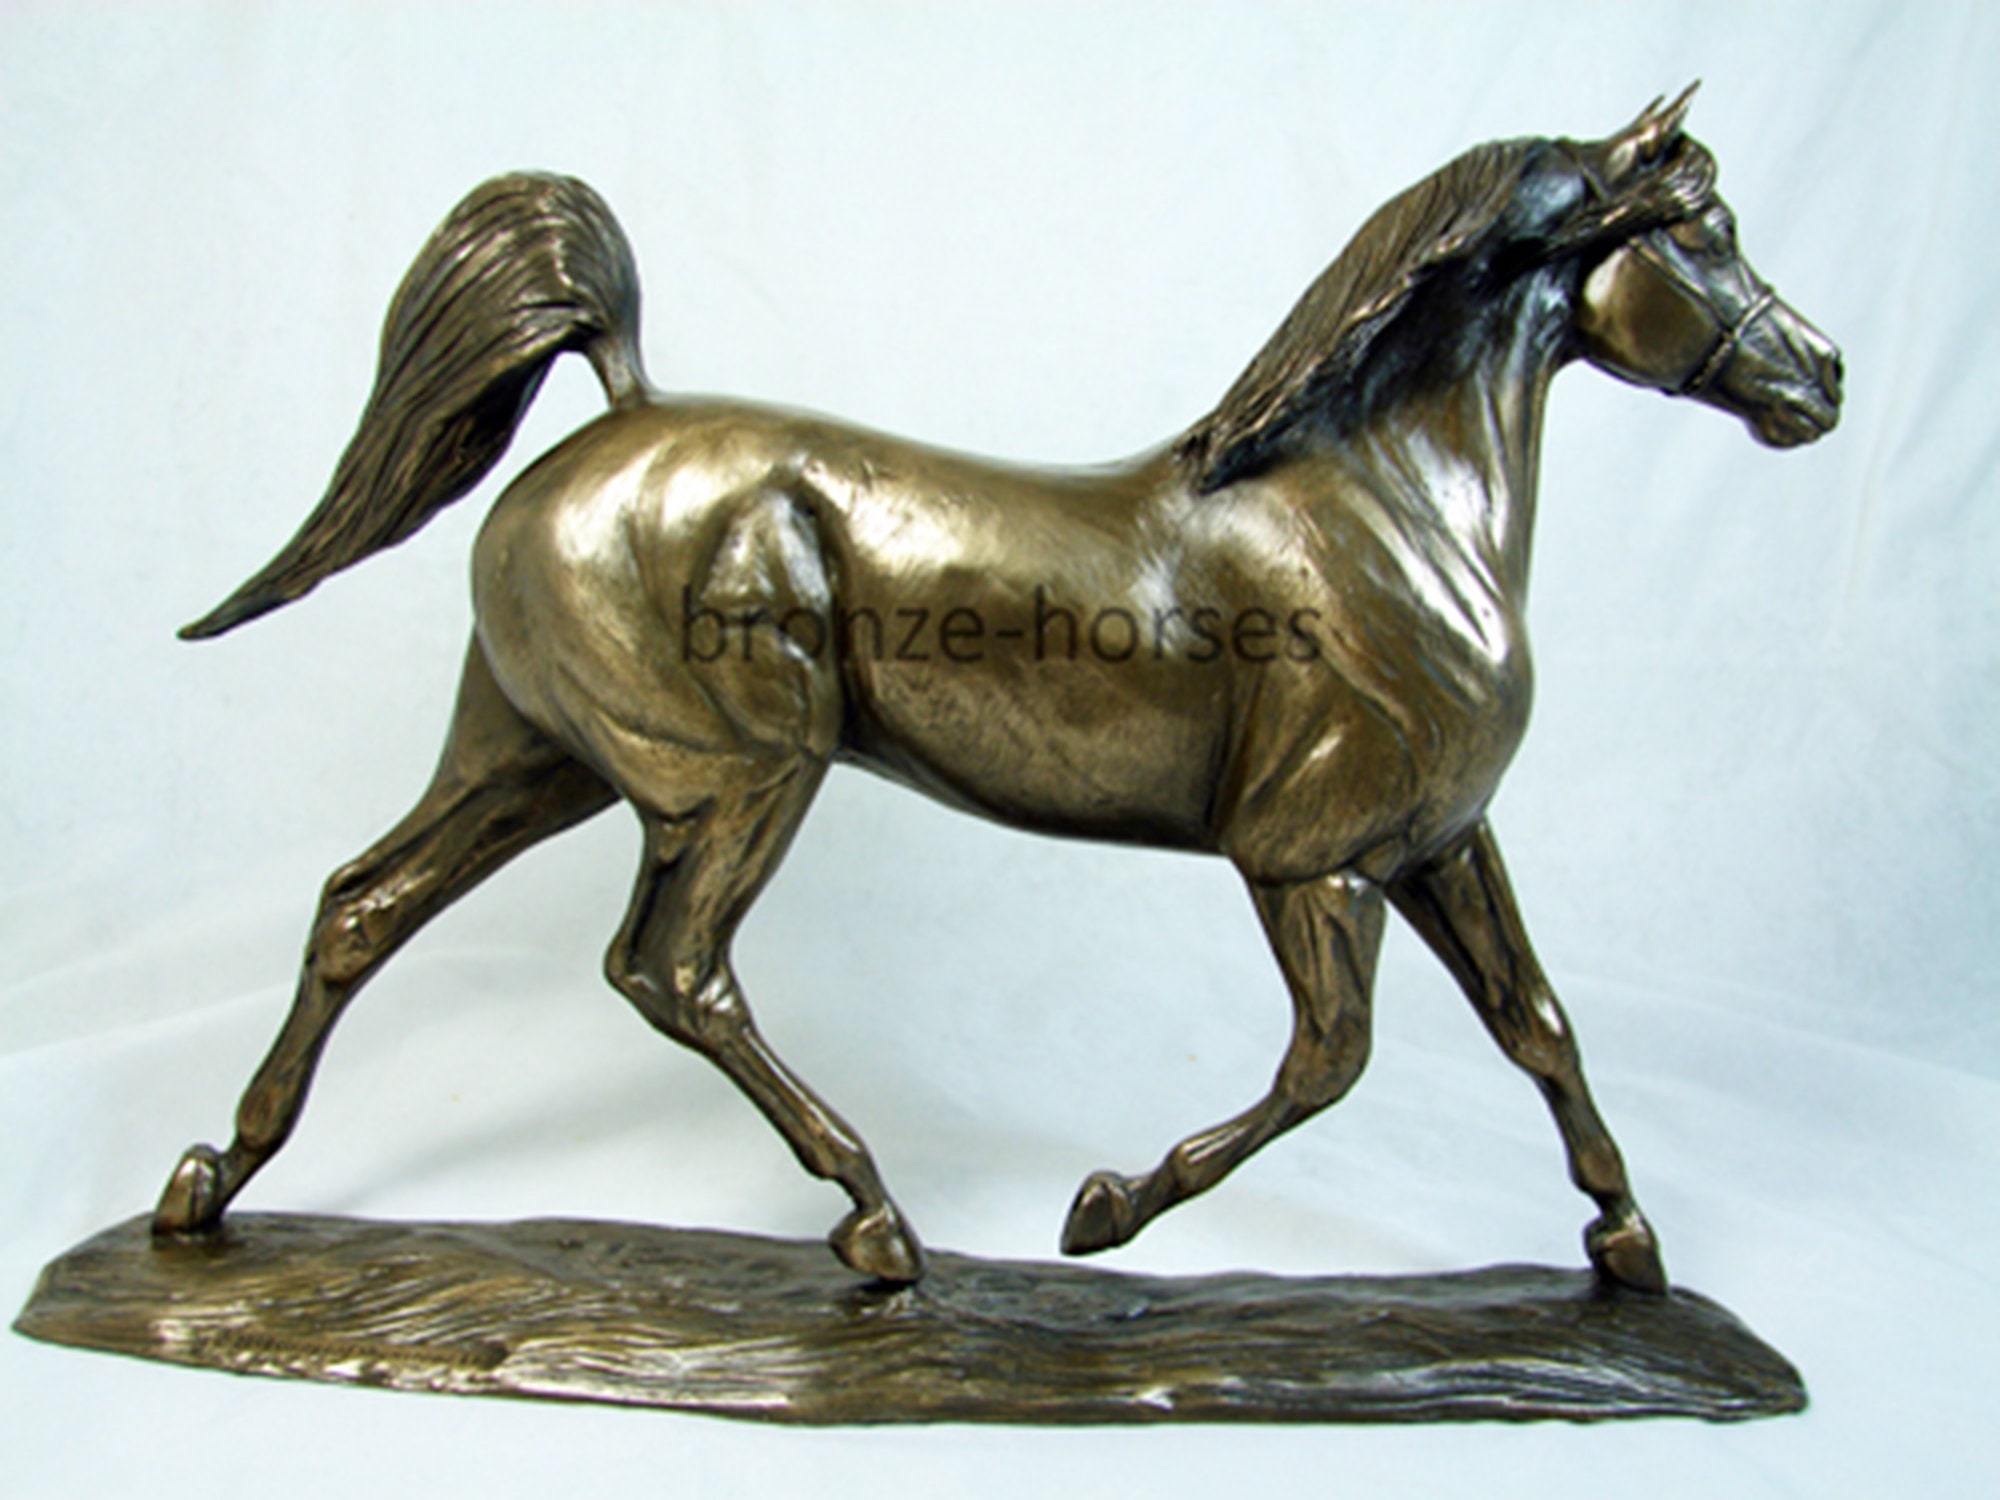 Figurine Trophy Prince Statue Arabian Horse Sculpture 